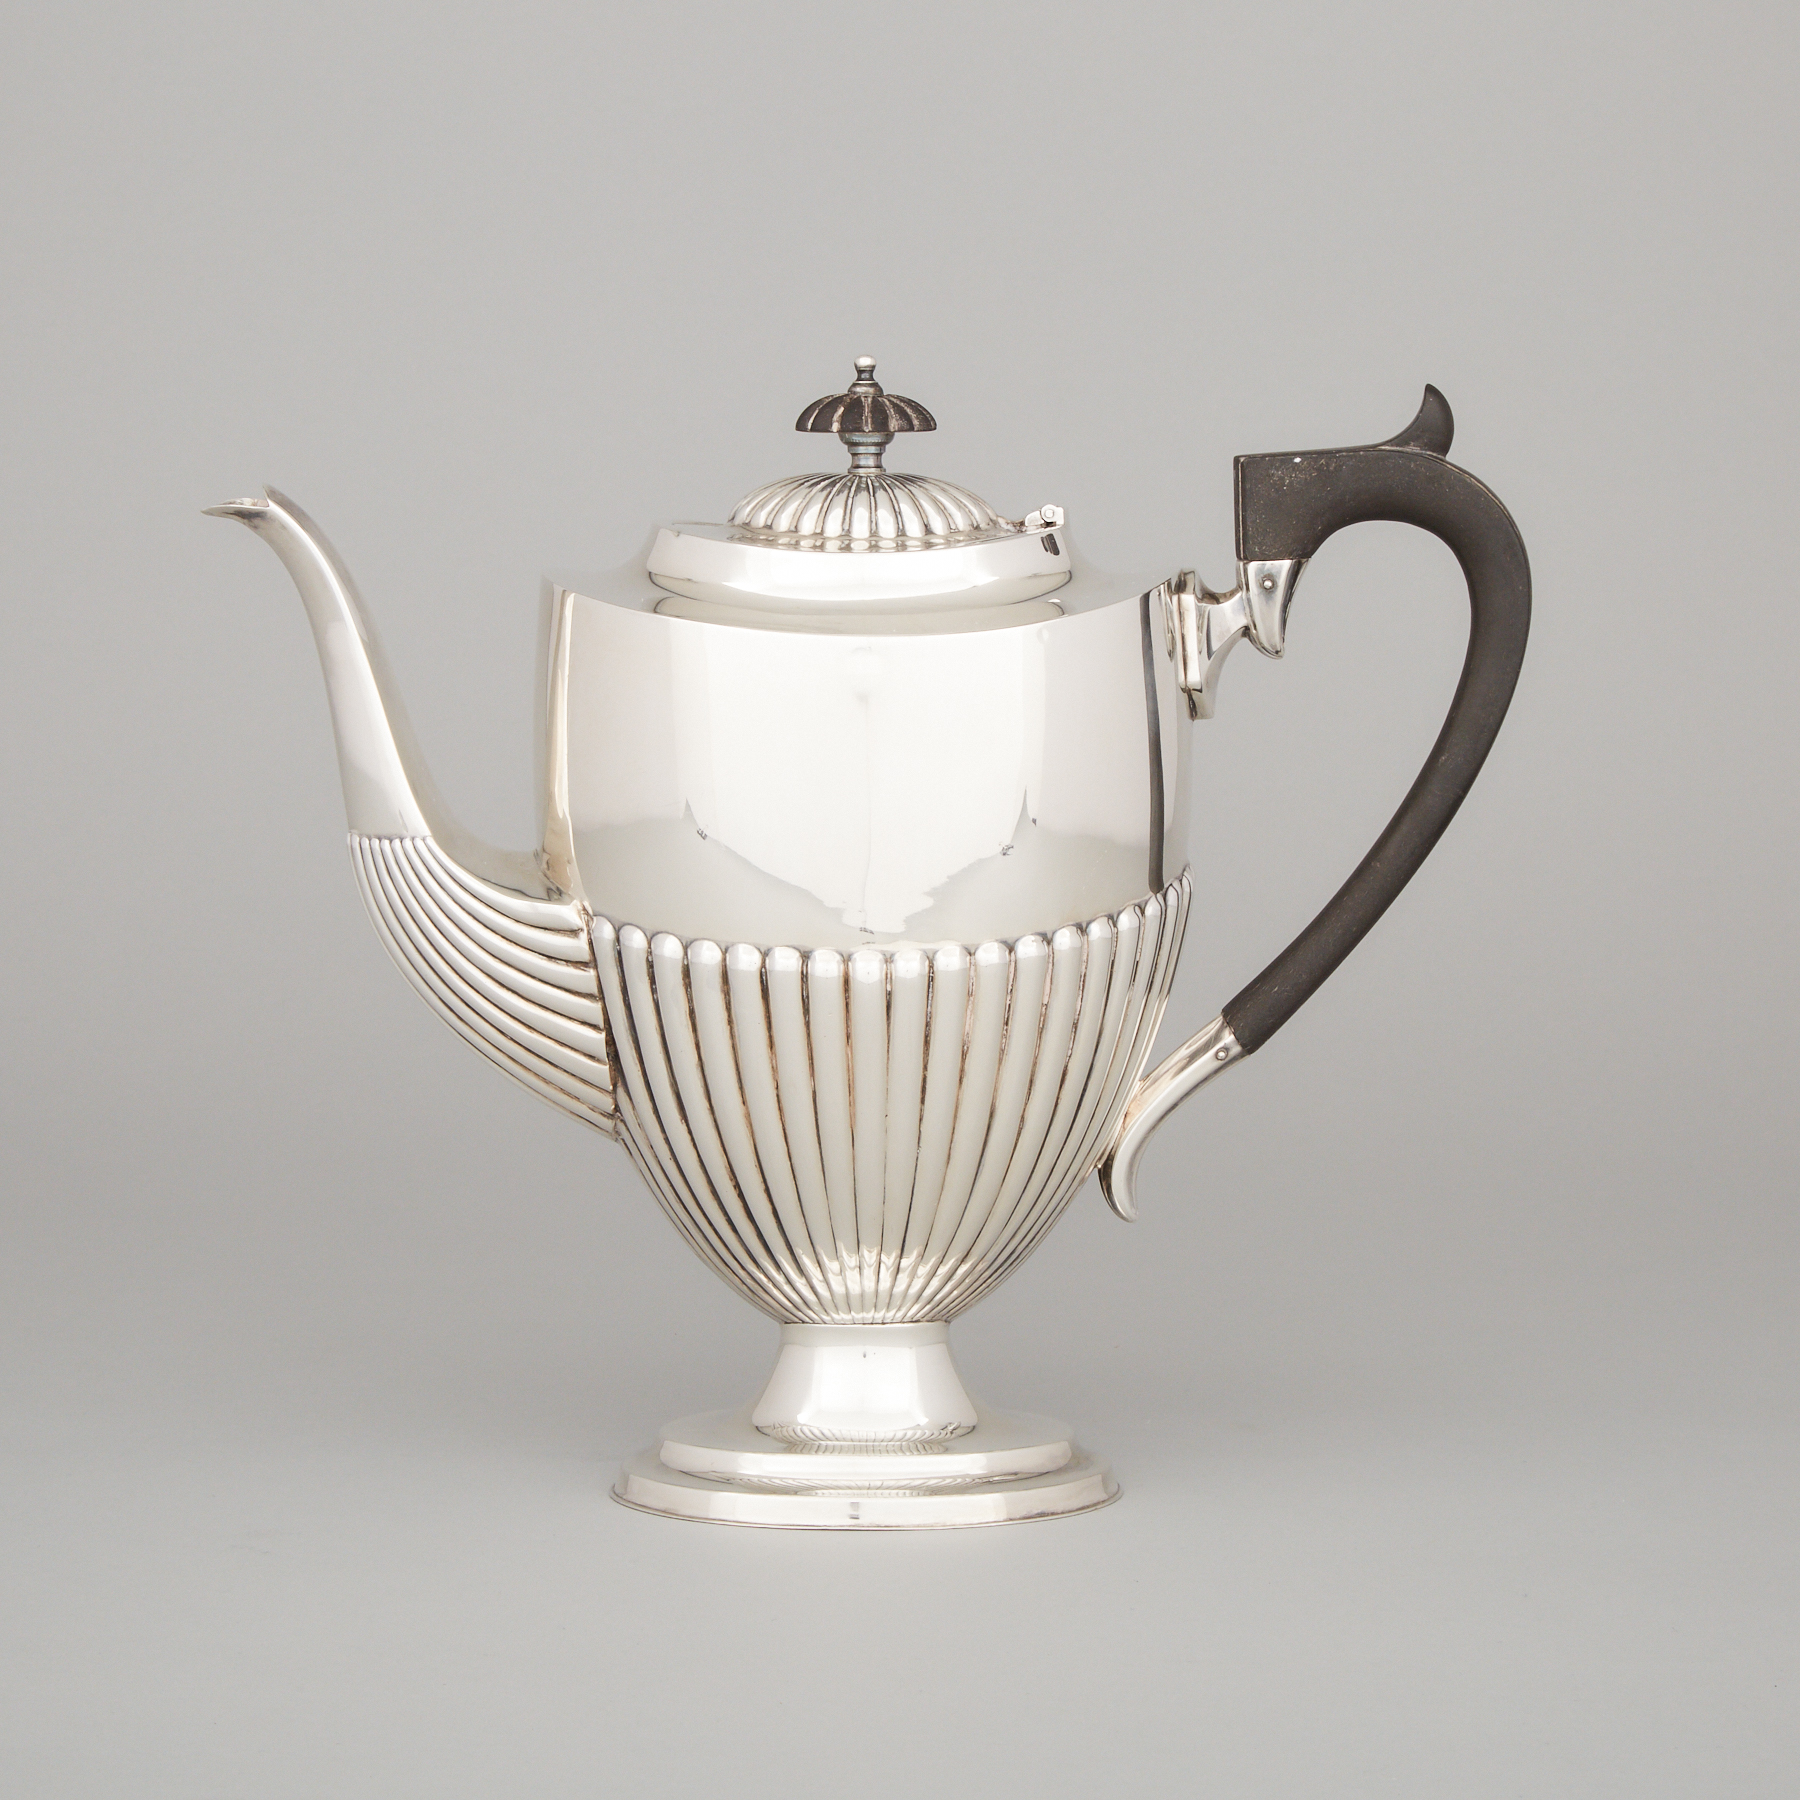 English Silver Coffee Pot, Barker Brothers (Herbert & Frank Barker), Chester, 1921